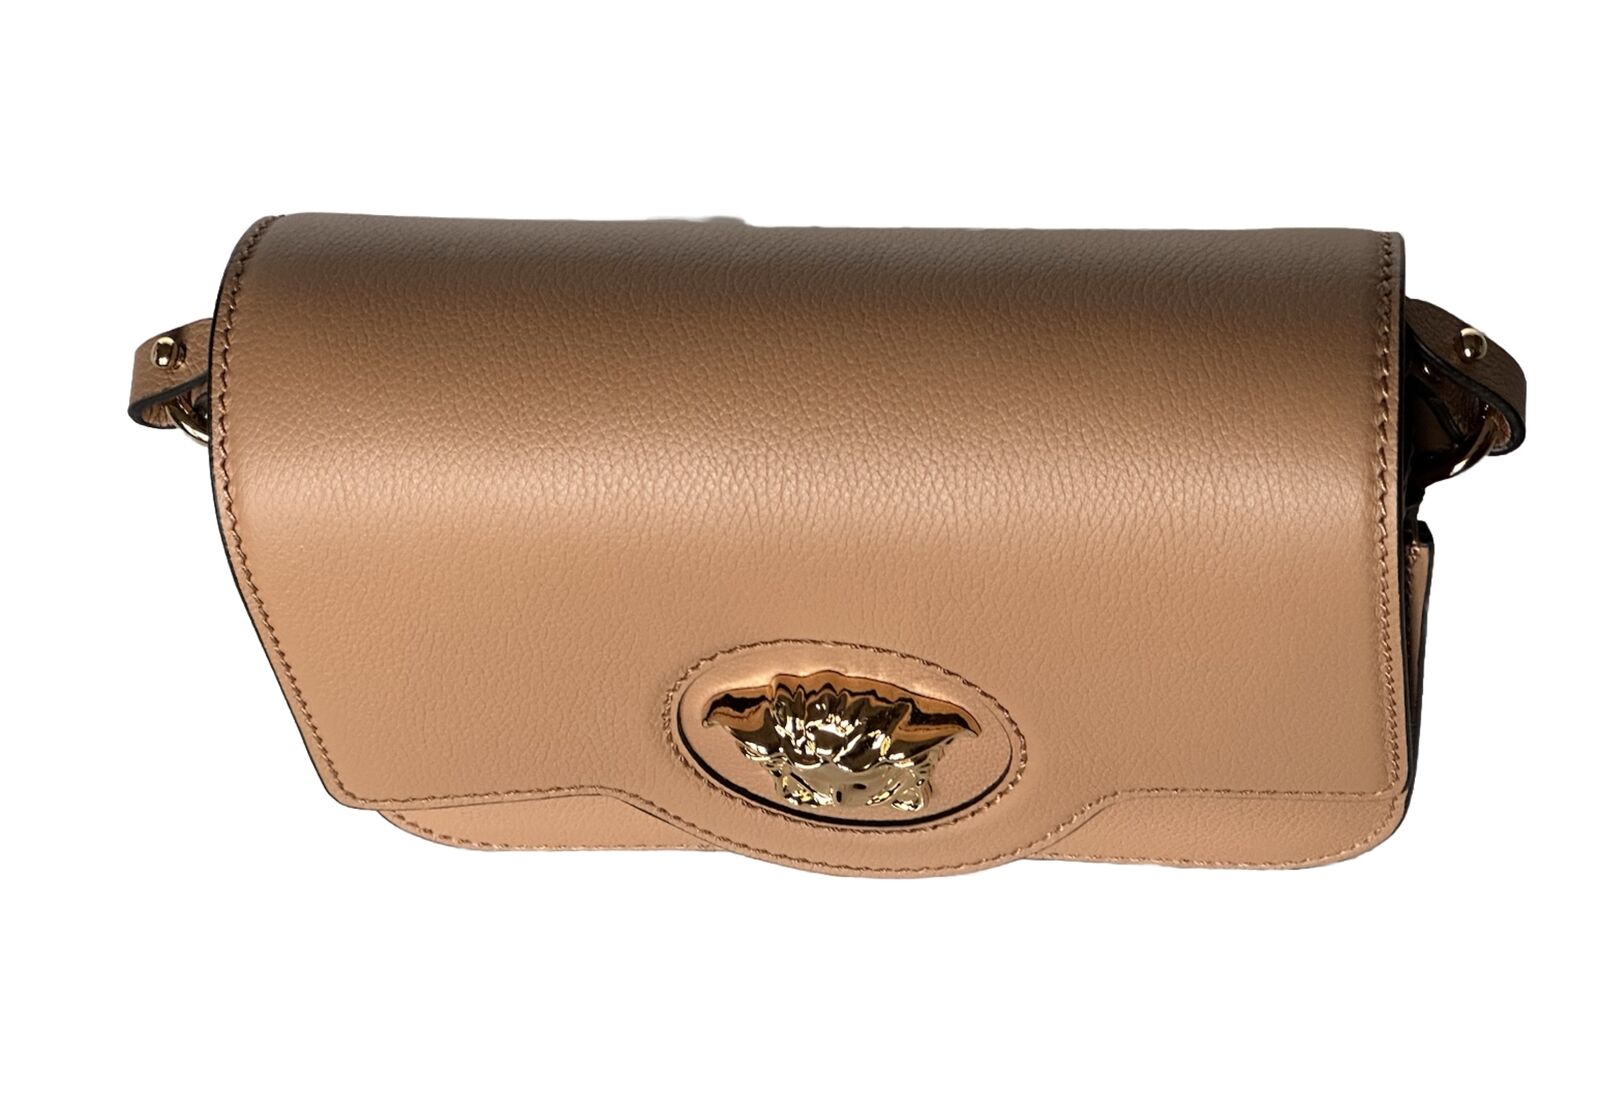 NWT $1550 Versace Medusa Head Leather Caramel Small Shoulder Bag 1008100 IT